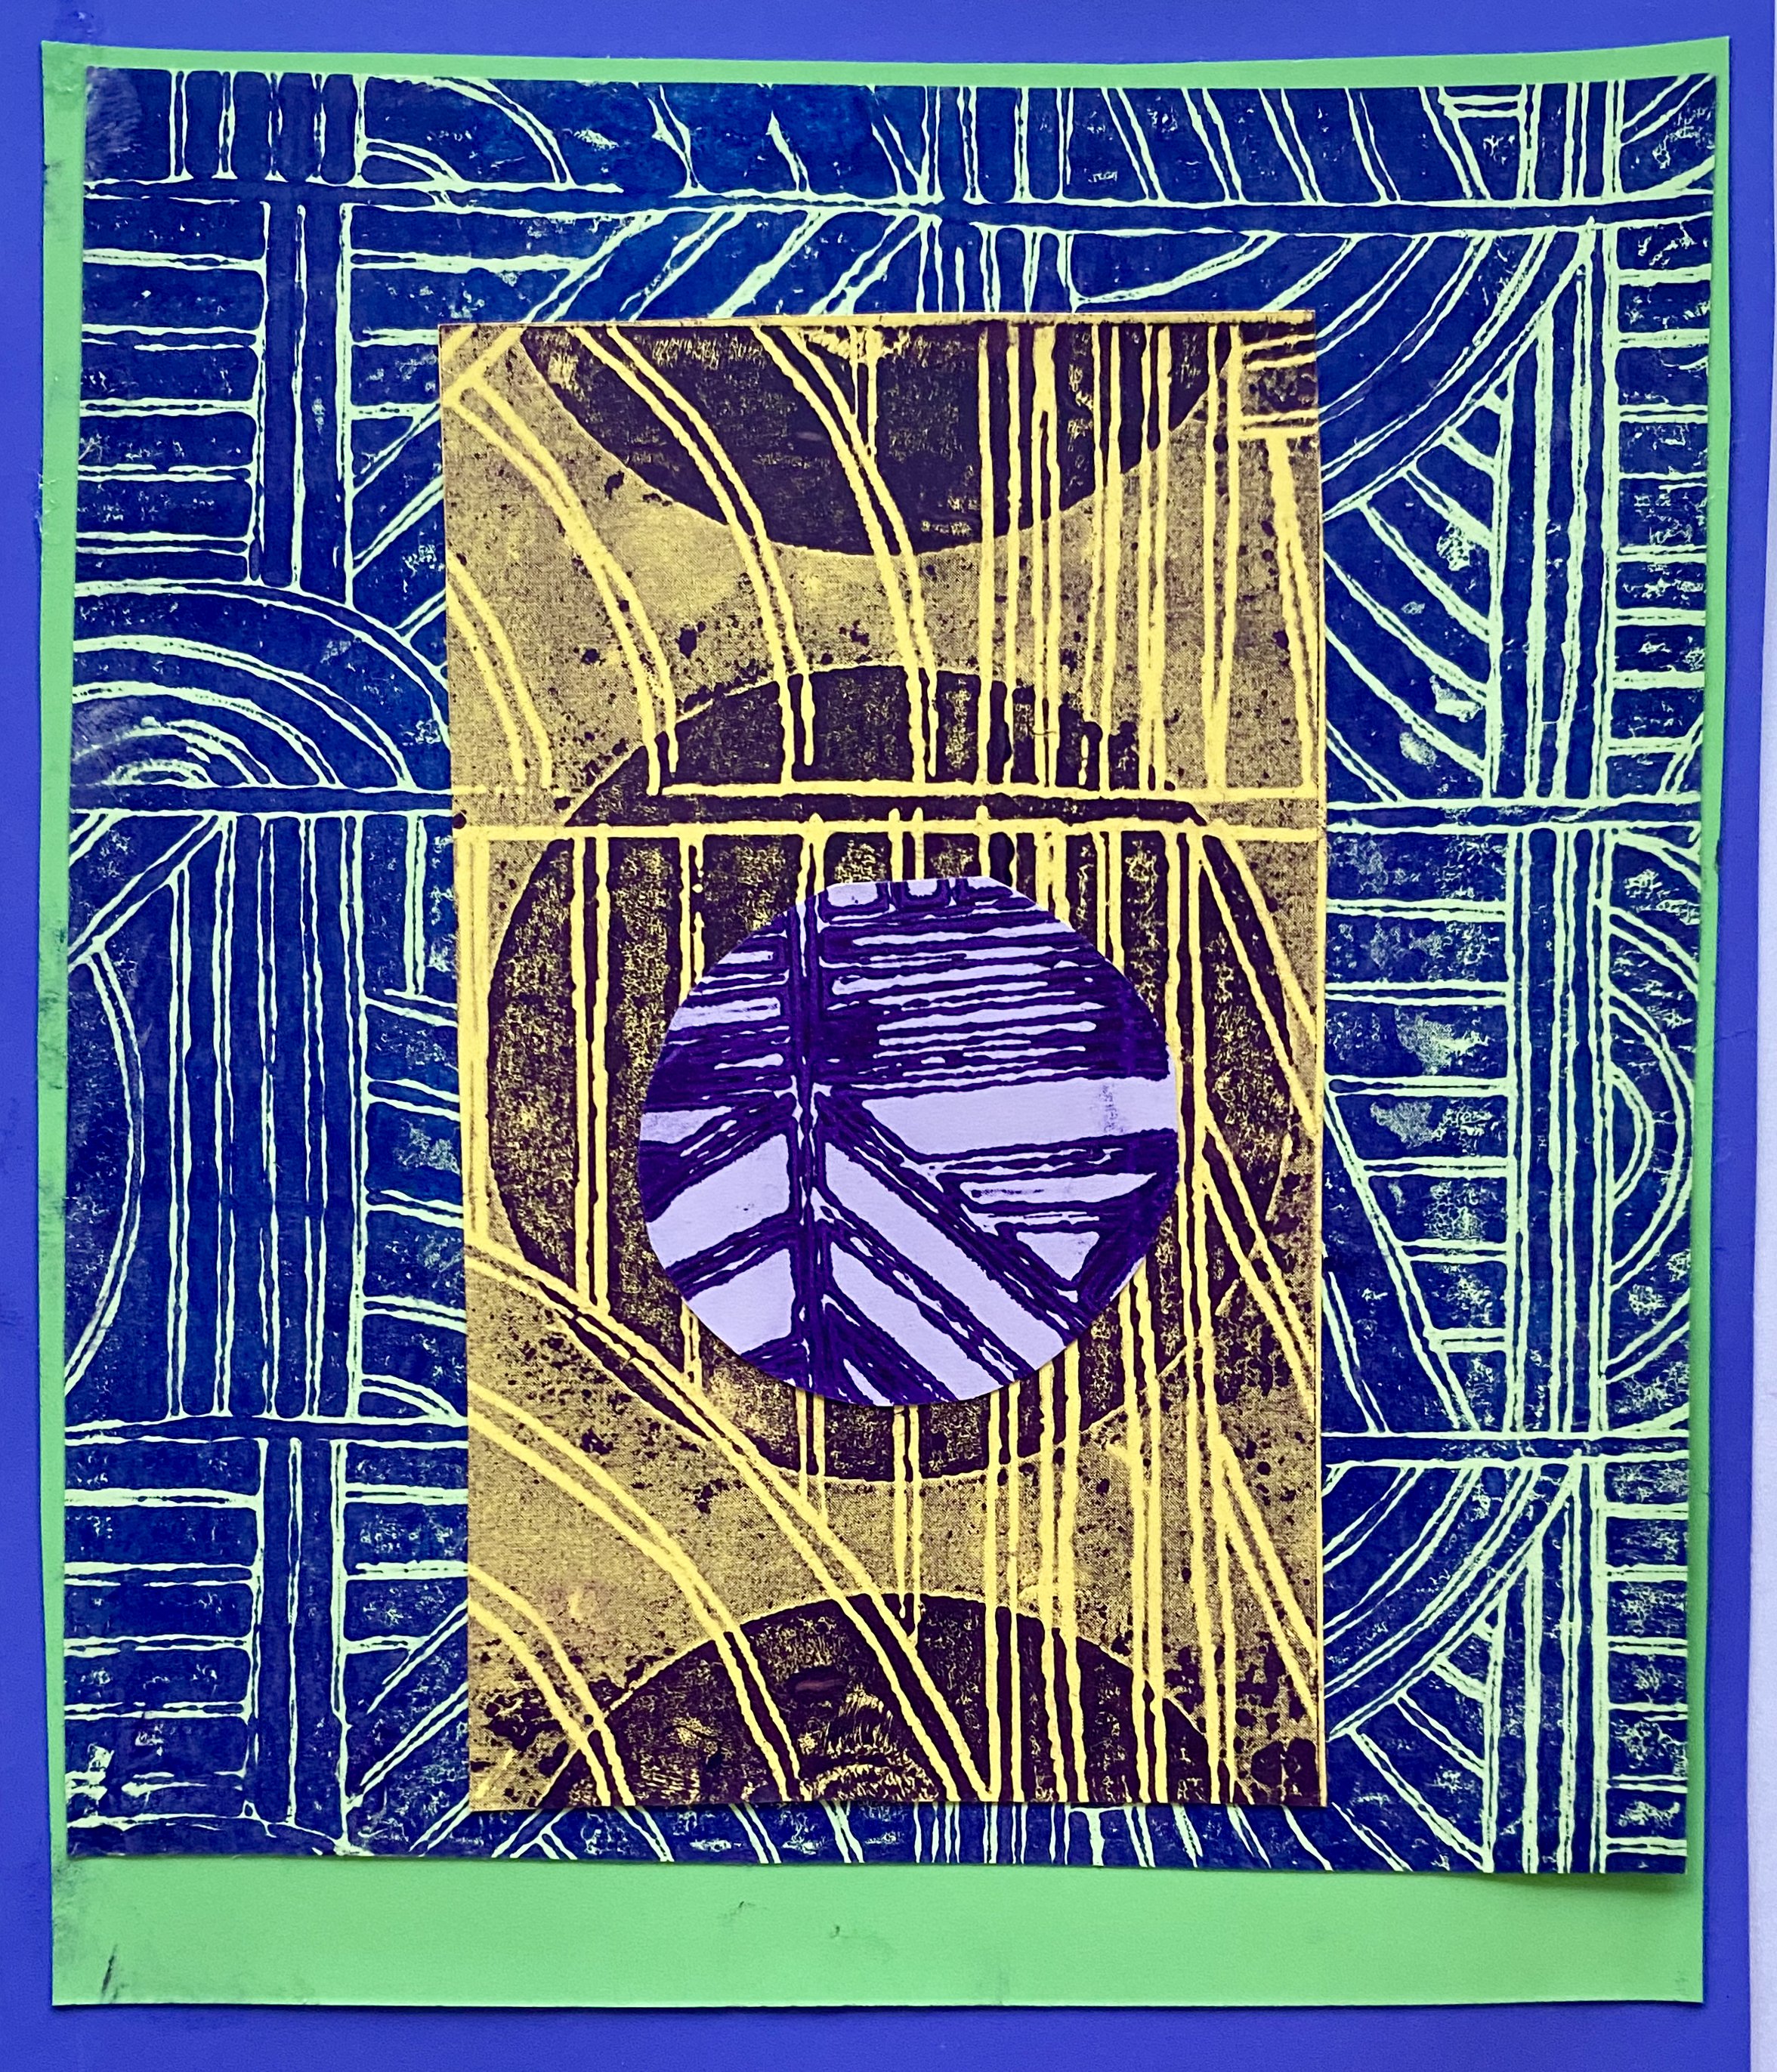 Rattan Color Study, Blue/Yellow, analogous green 6 x 9", collage/litho